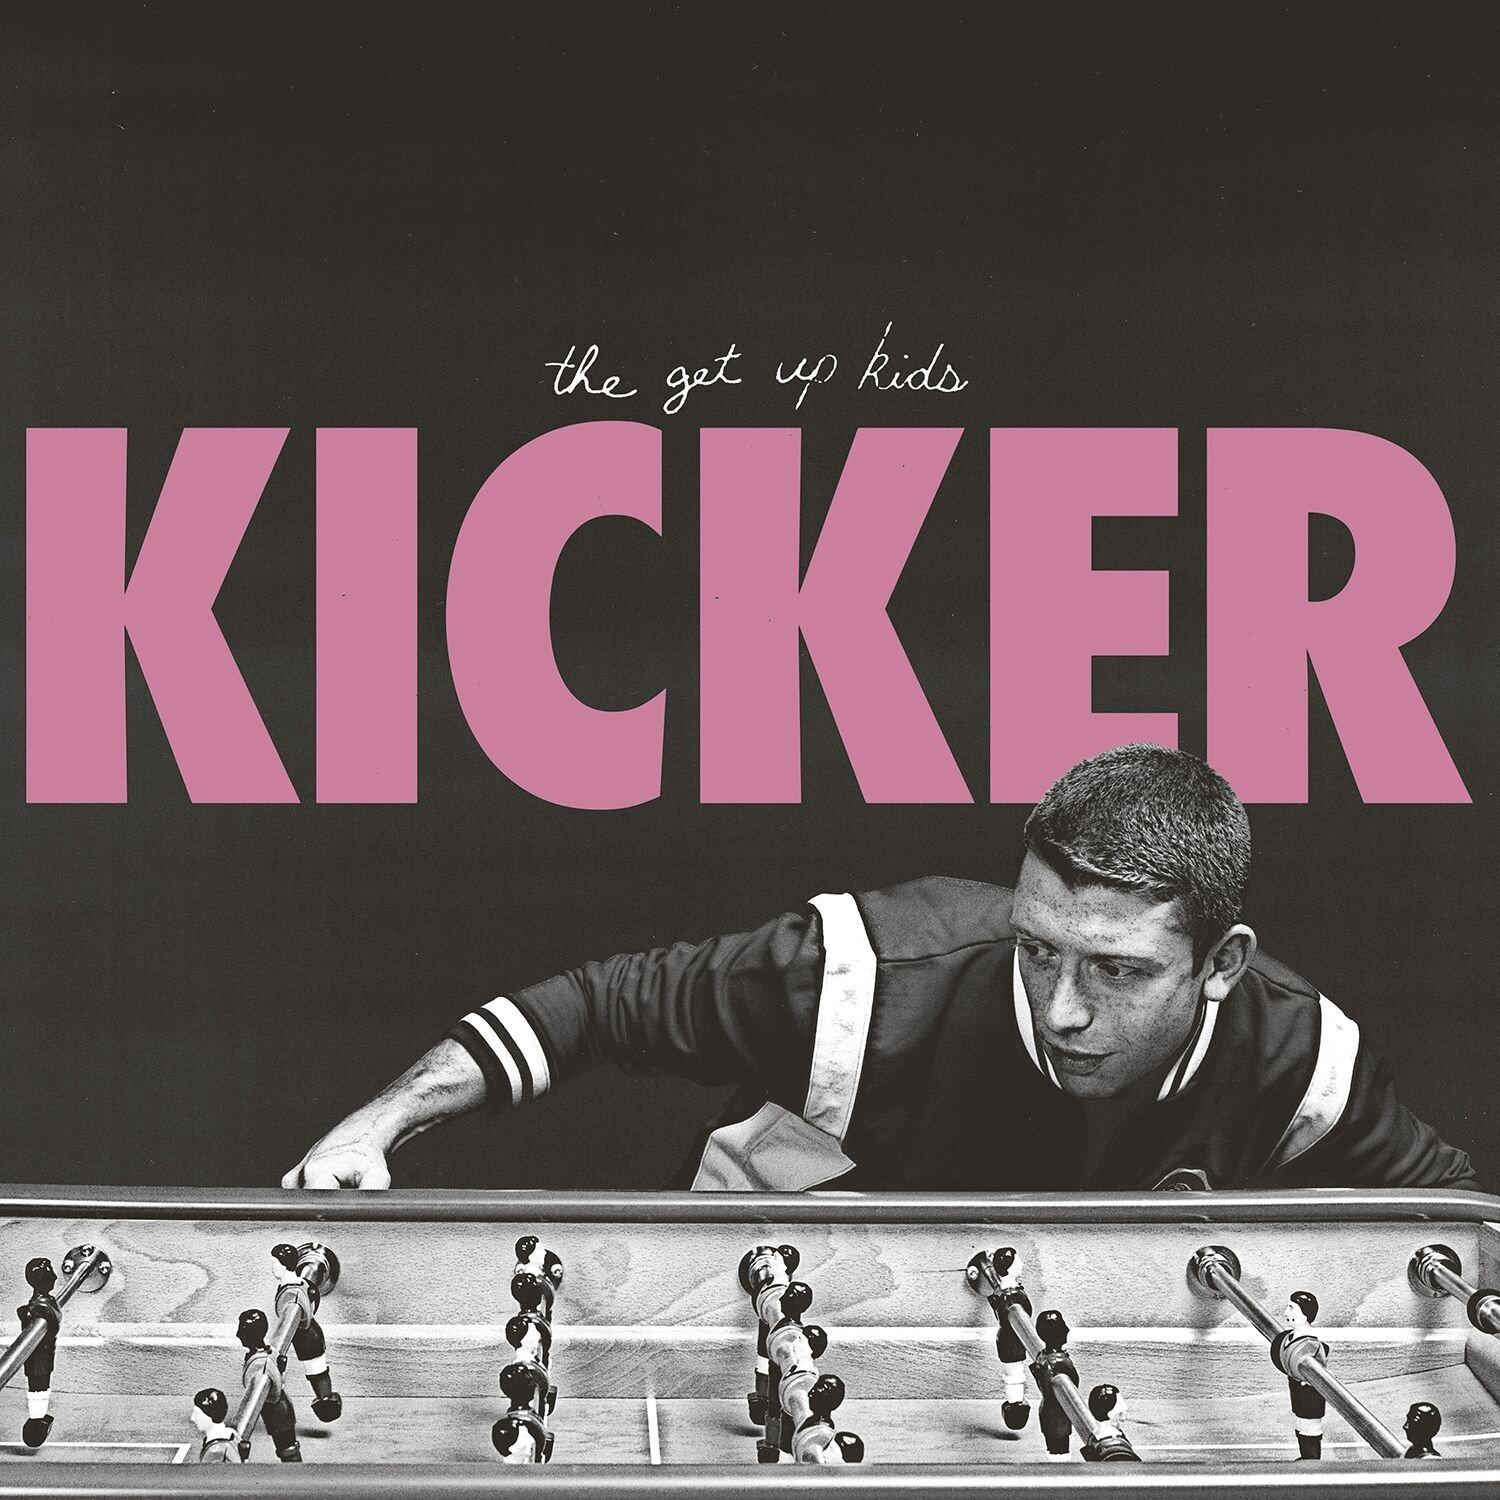 The Kicker (EP Up - - (analog)) Get Kids